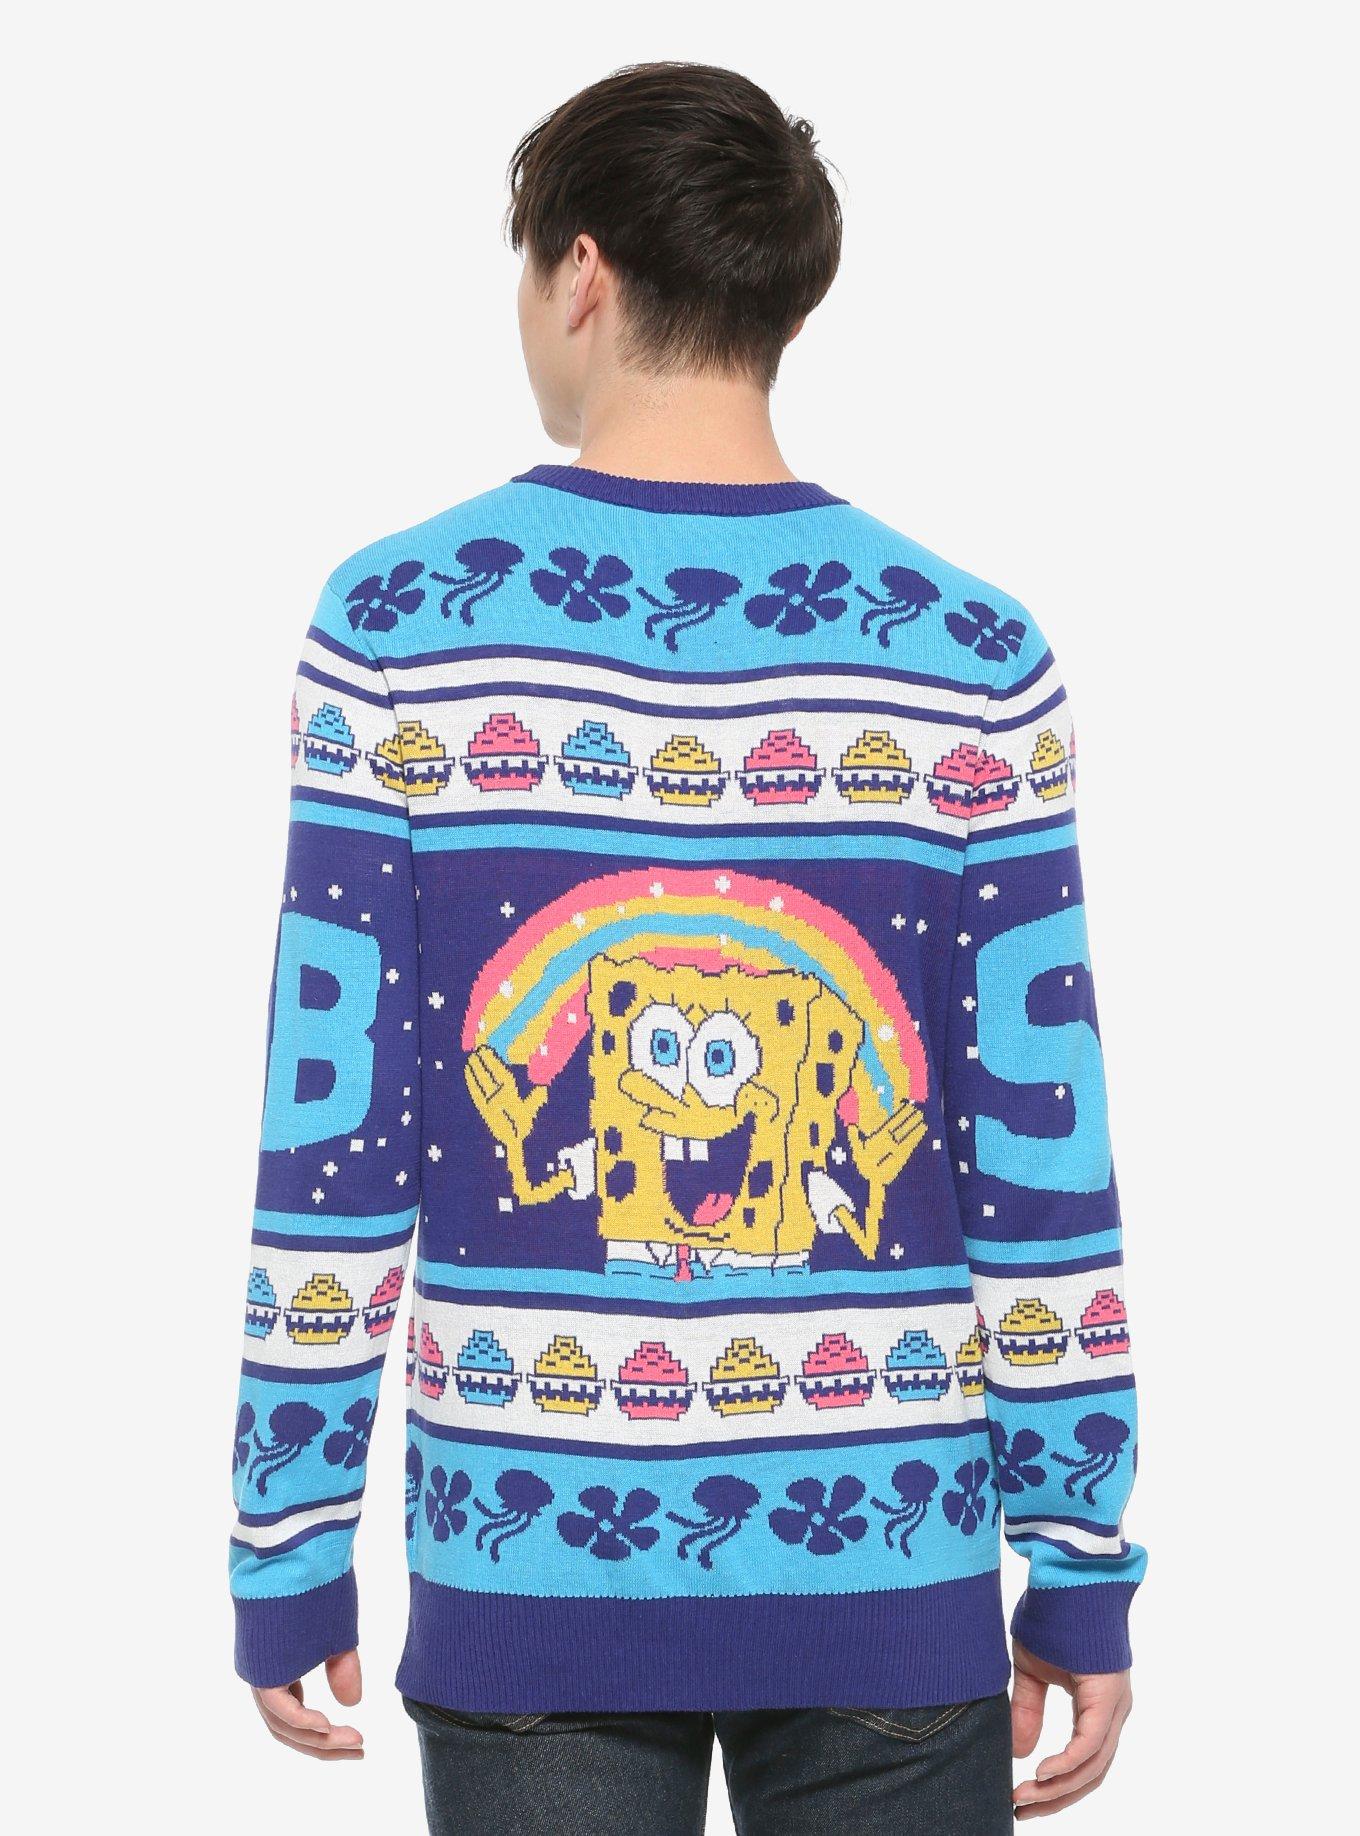 SpongeBob SquarePants Krabby Patty Holiday Sweater, MULTI, alternate